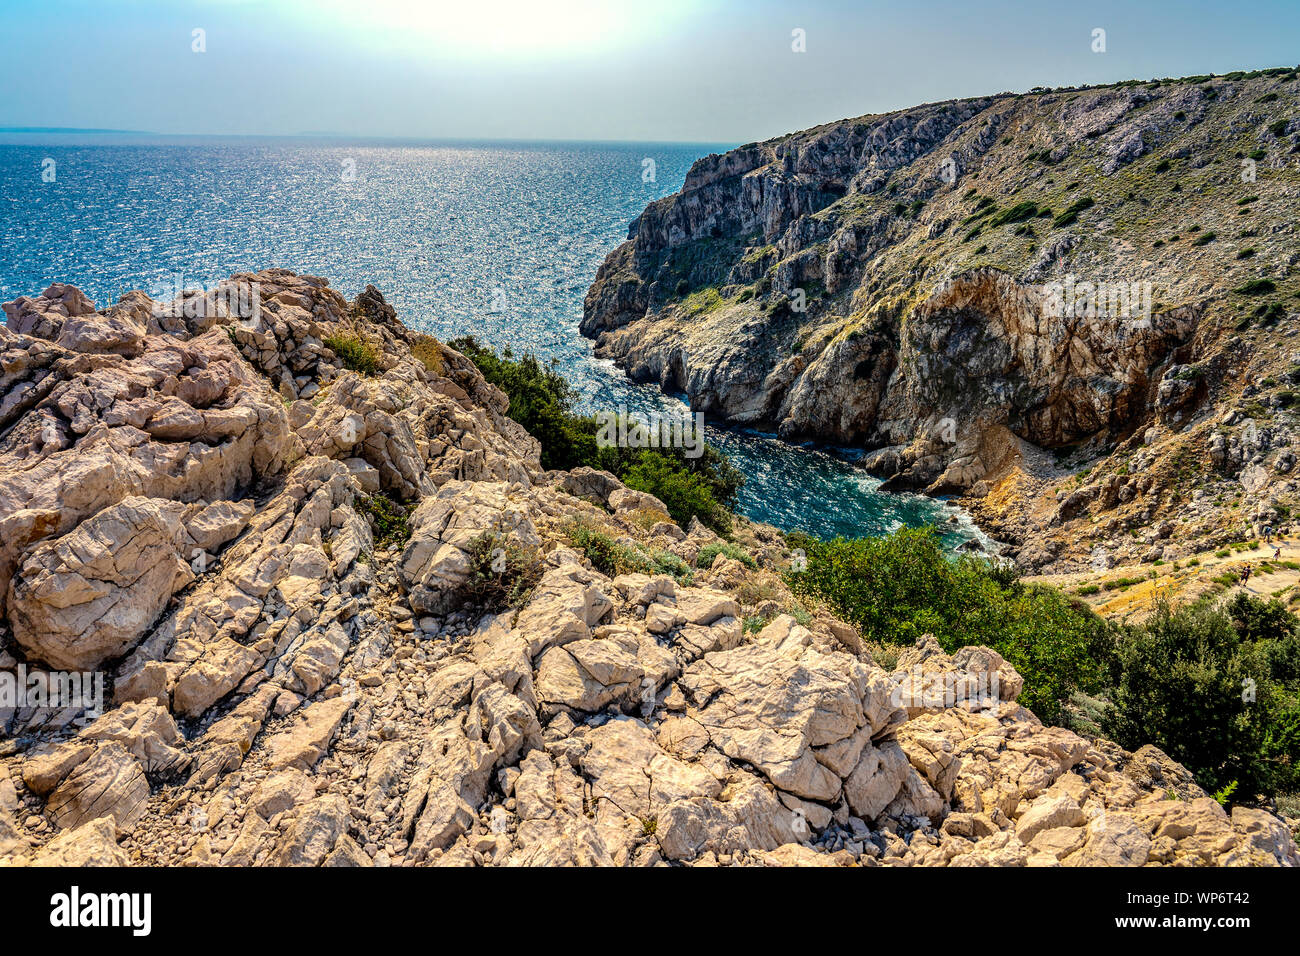 rocky scenic mali bok orlec beach on cres island croatia Stock Photo